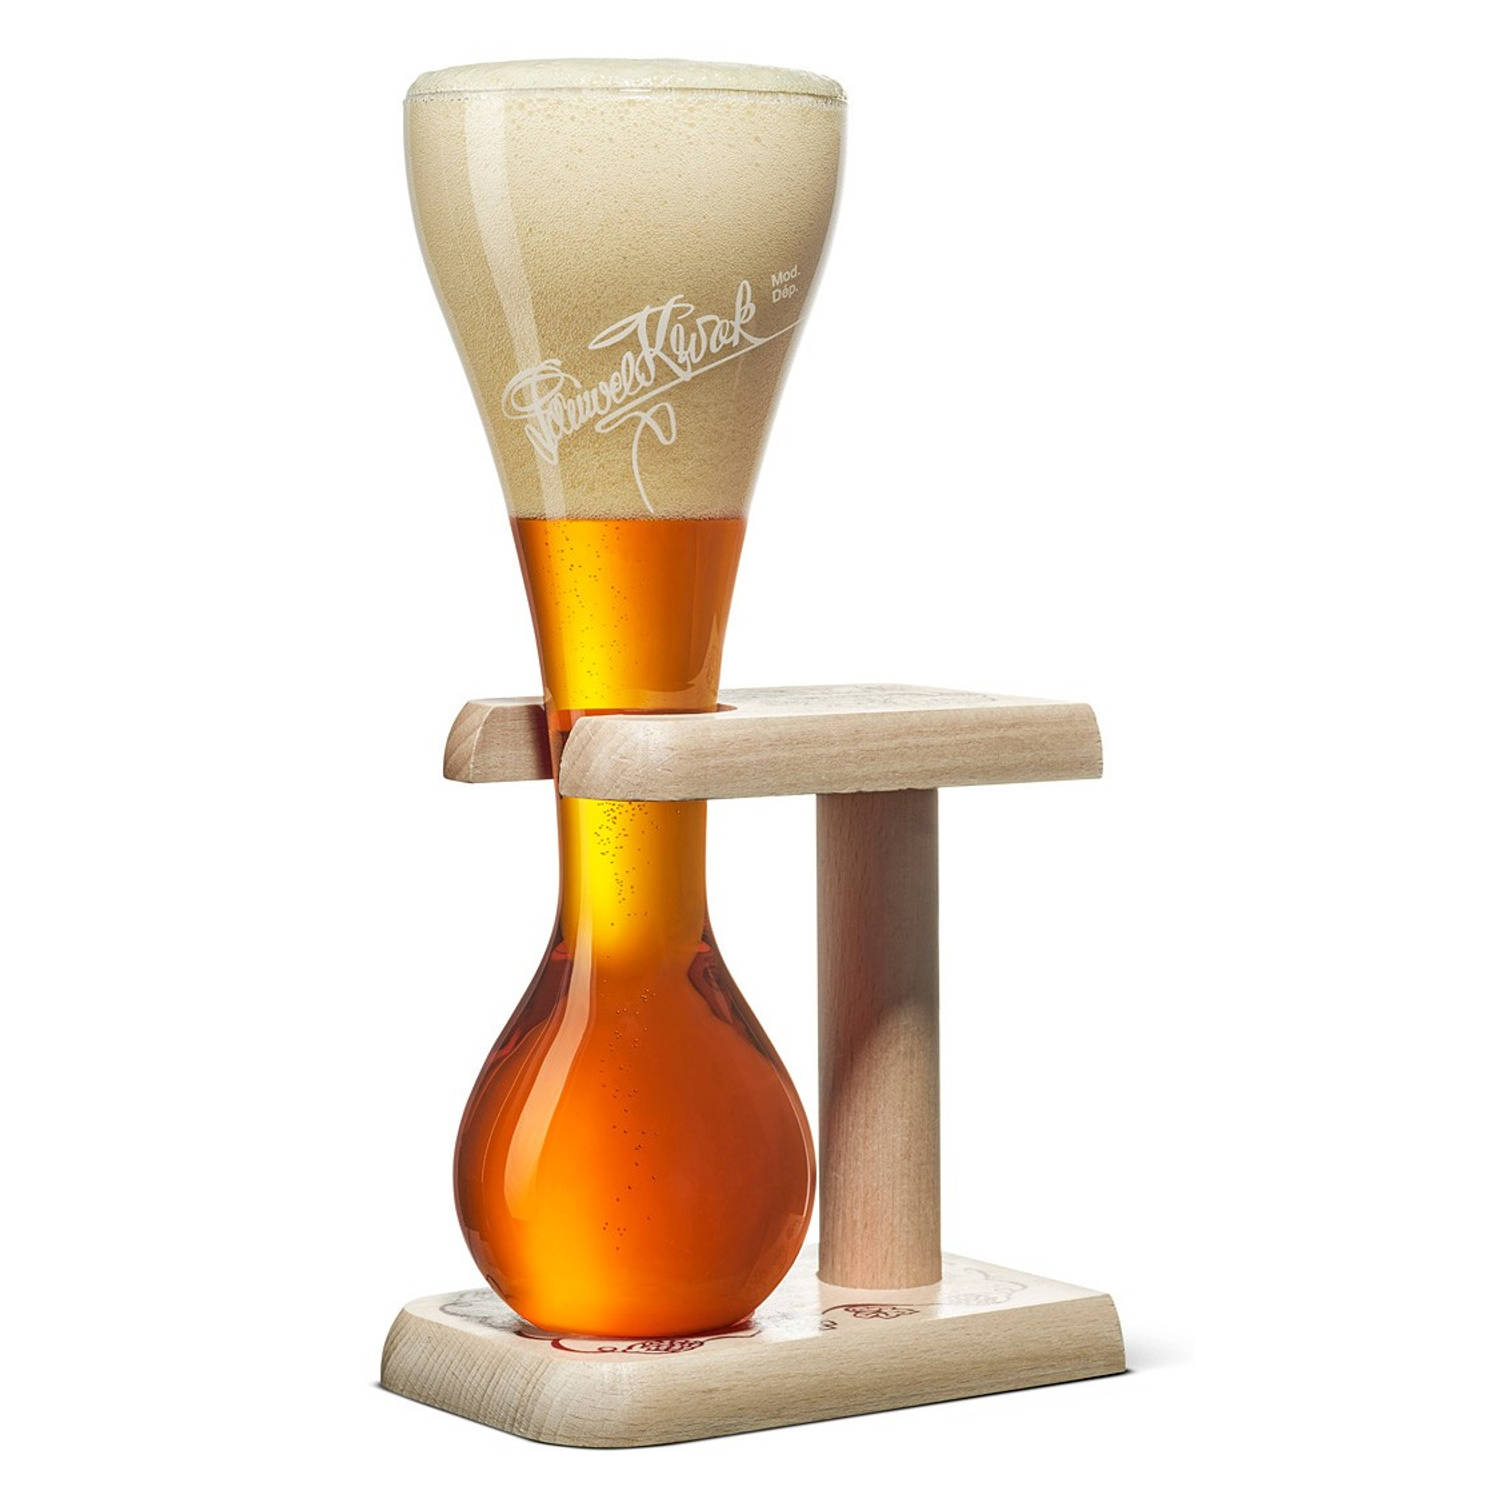 Bosteels Pauwel Kwak koetsiersglas 33cl - Bier Glas in Houder - 0,33 l - 330 ml